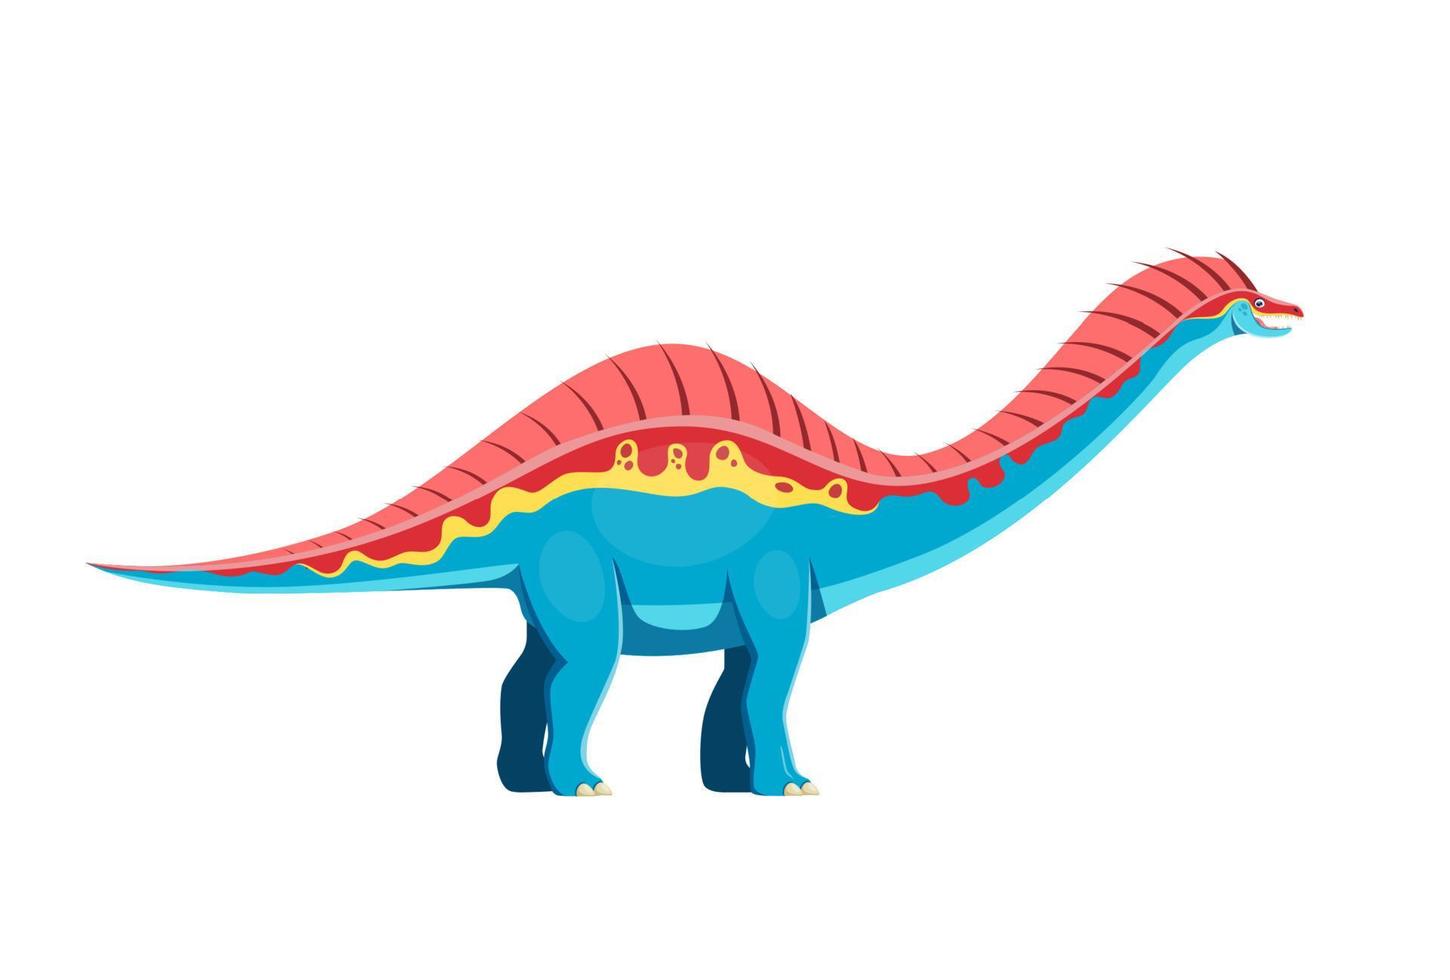 Cartoon Amargasaurus dinosaur funny character vector